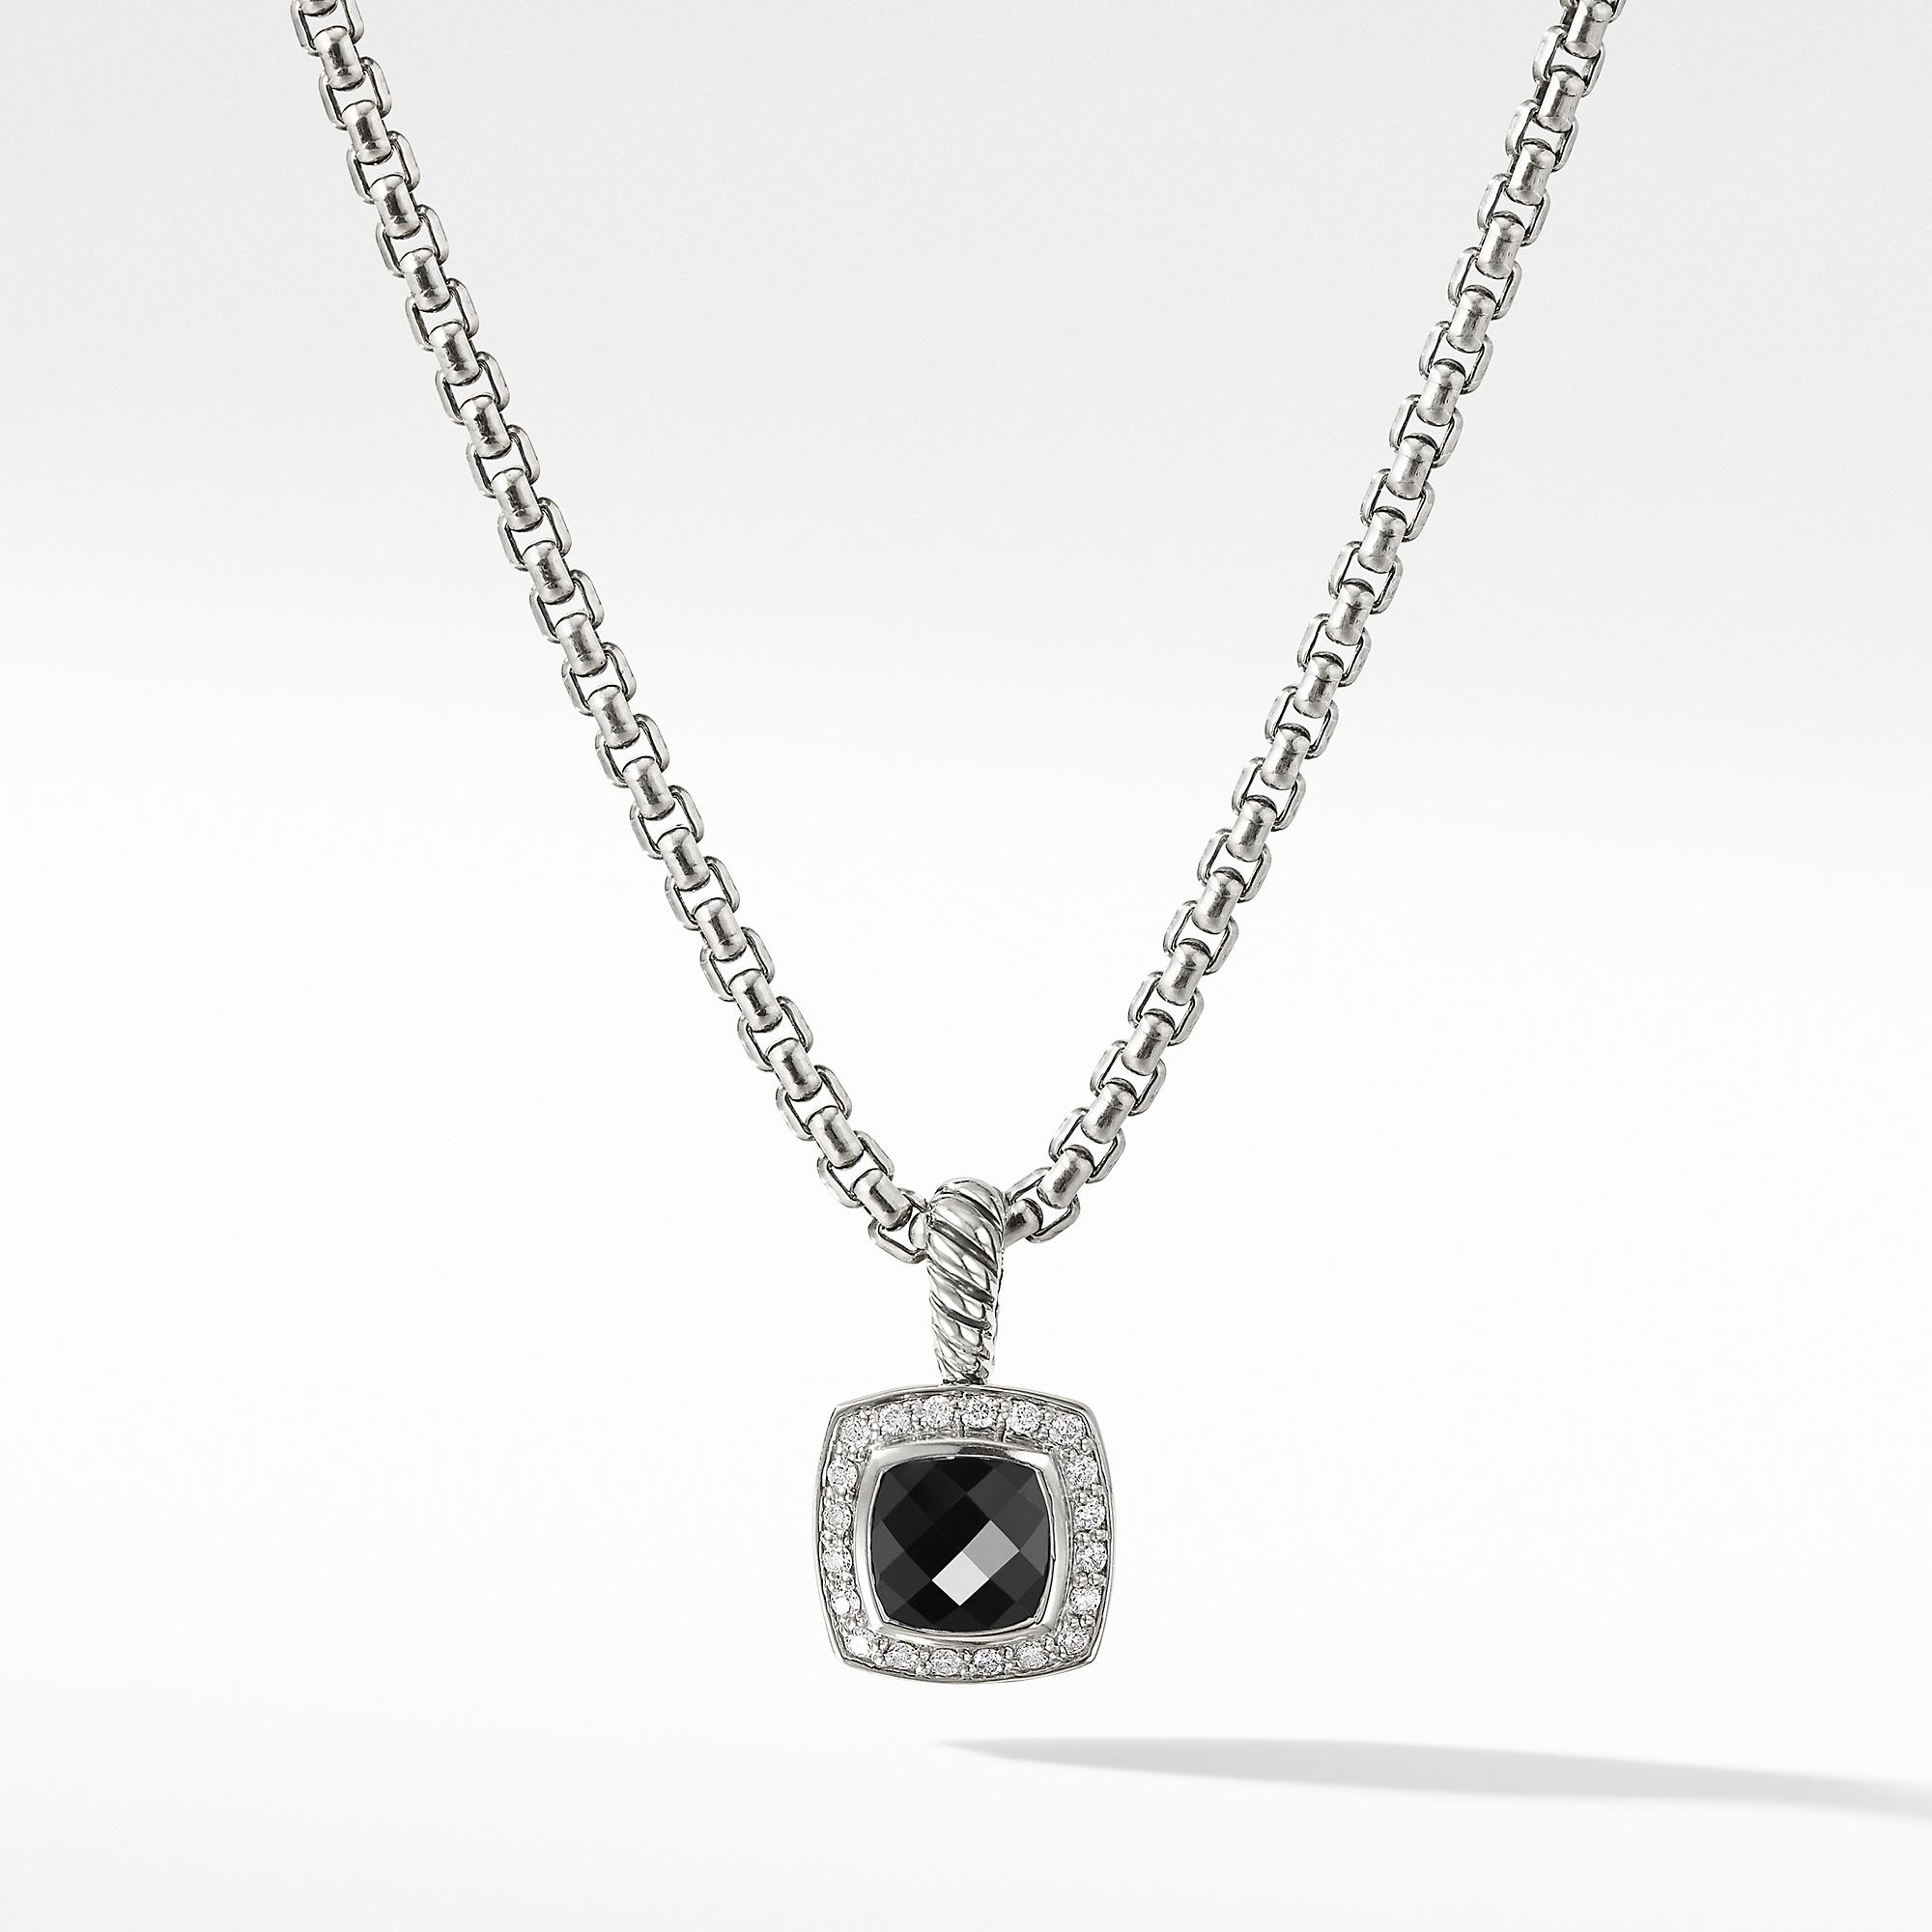 David Yurman Albion Pendant Necklace with Black Onyx and Diamonds